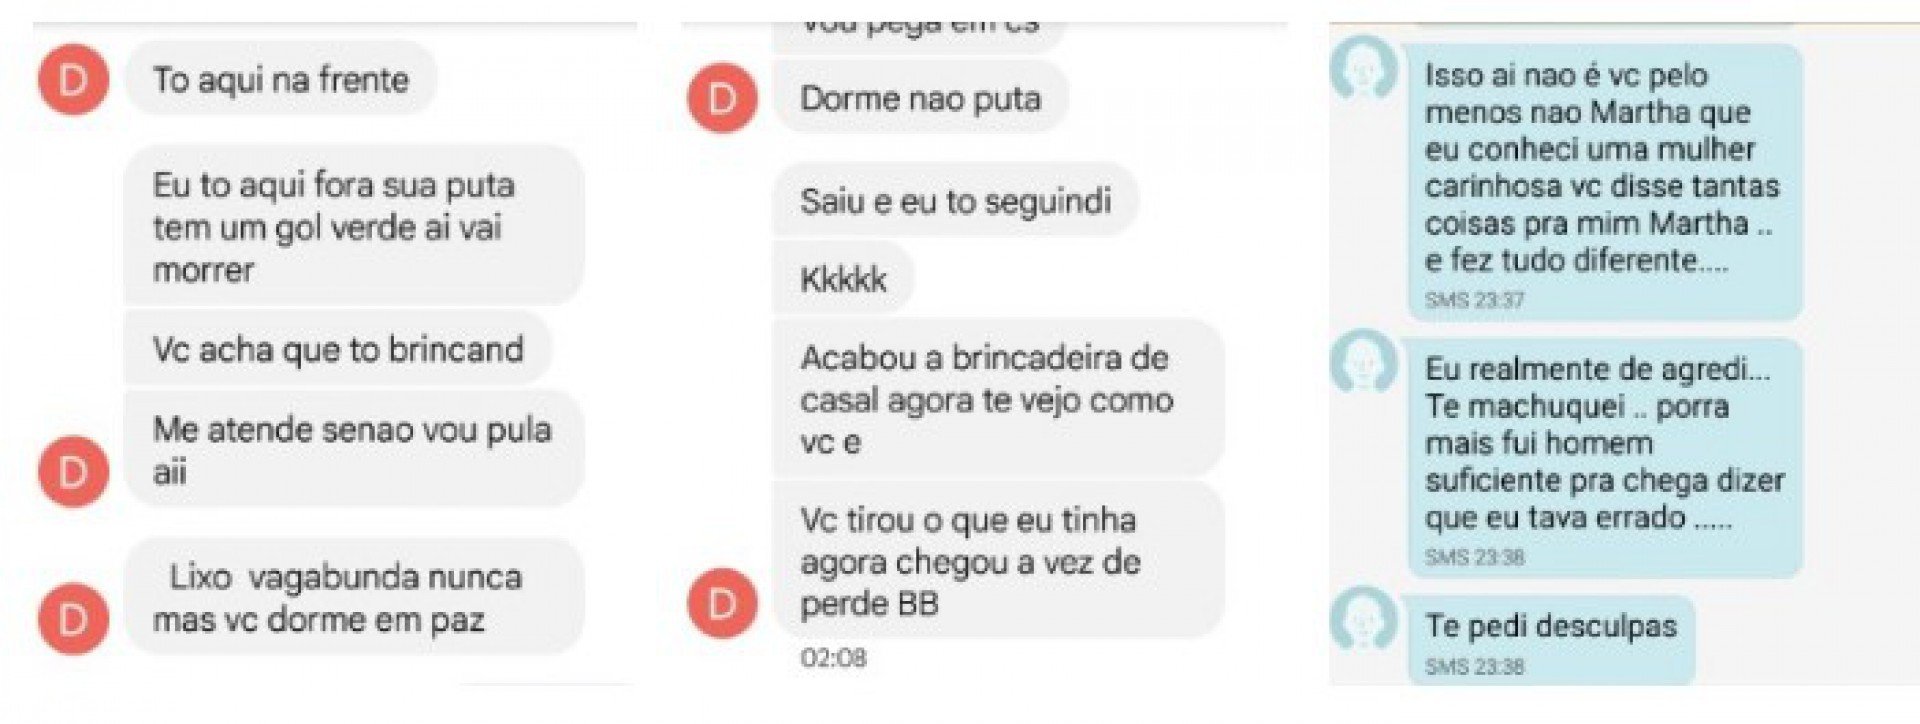 Homem confessa agressões através de mensagens - Letycia Rocha (RC24h)